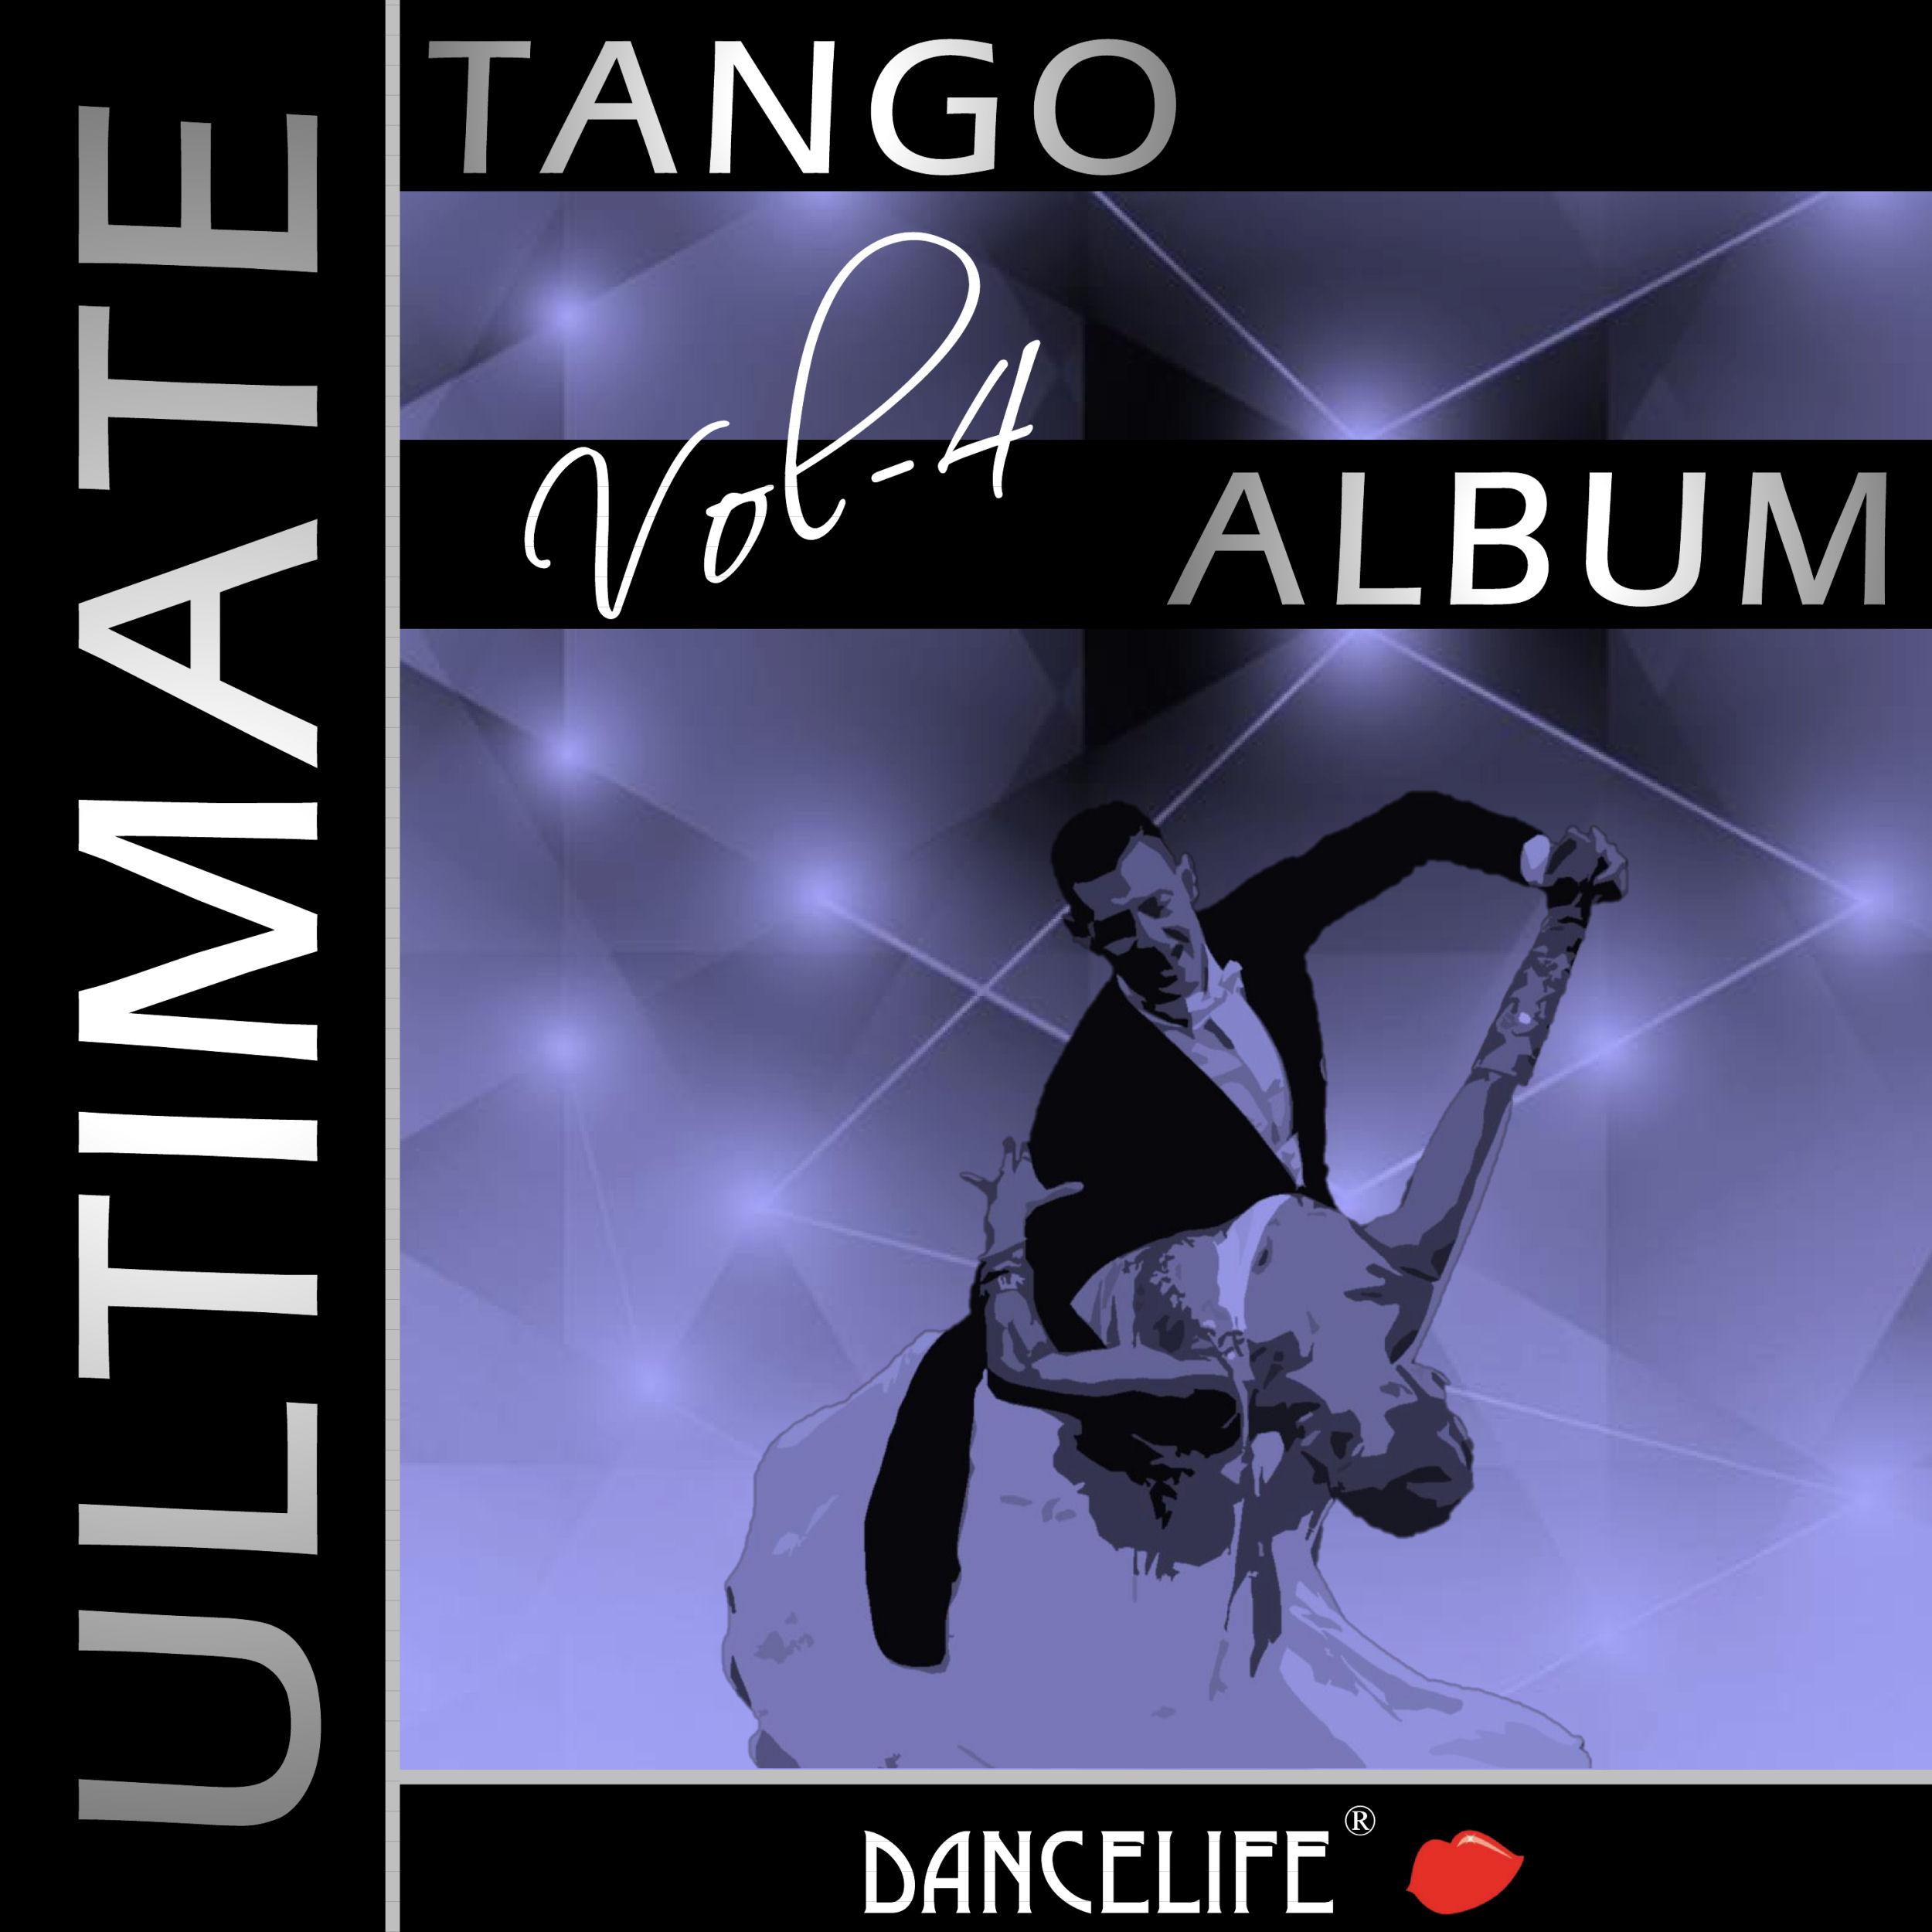 Dancelife presents: The Ultimate Tango Album, Vol. 4